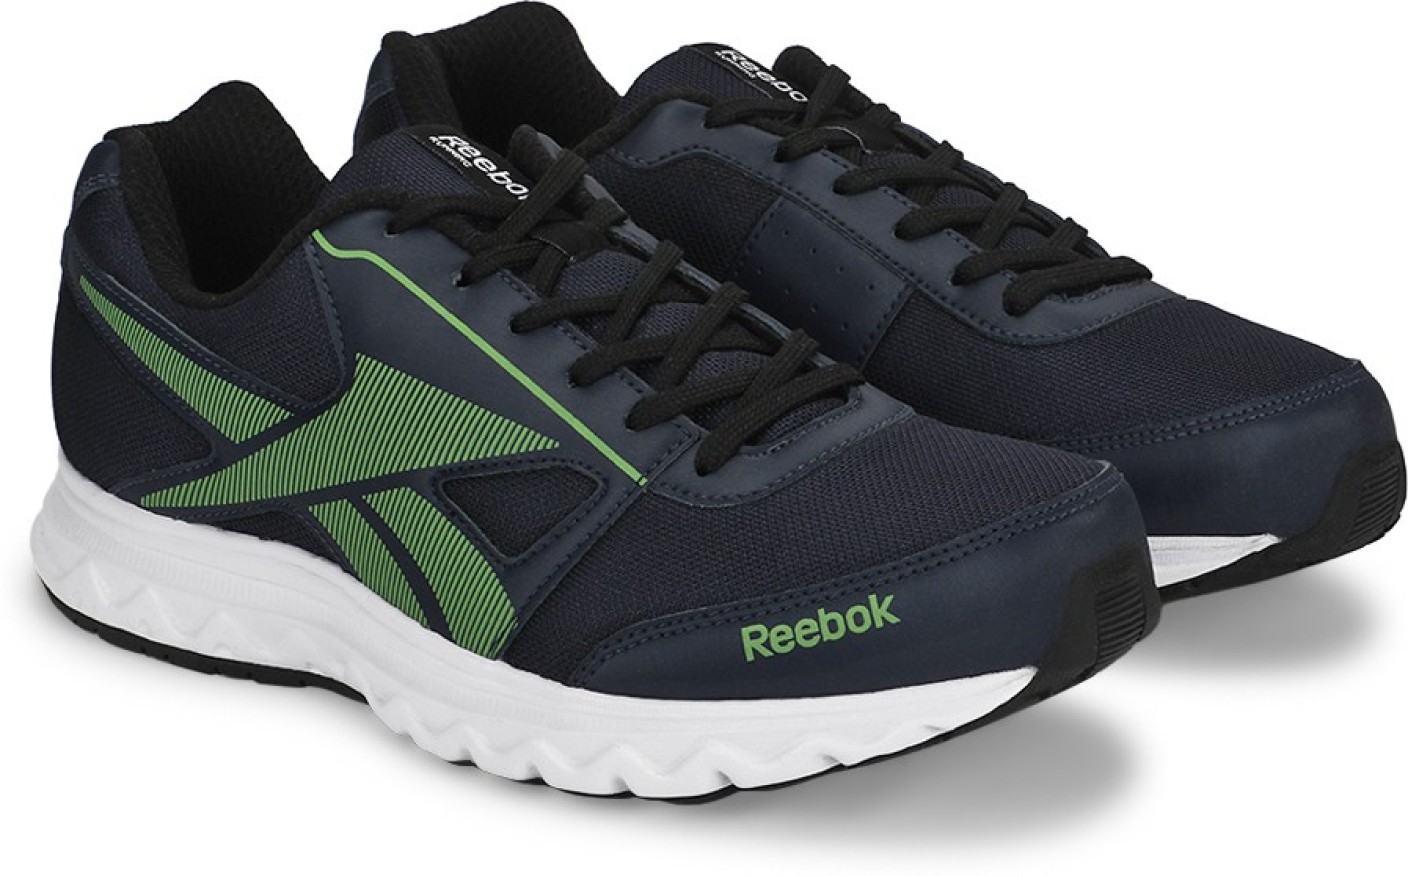 Reebok ULTIMATE SPEED 4.0 Running Shoes For Men - Buy NAVY/BLACK/NEON ...